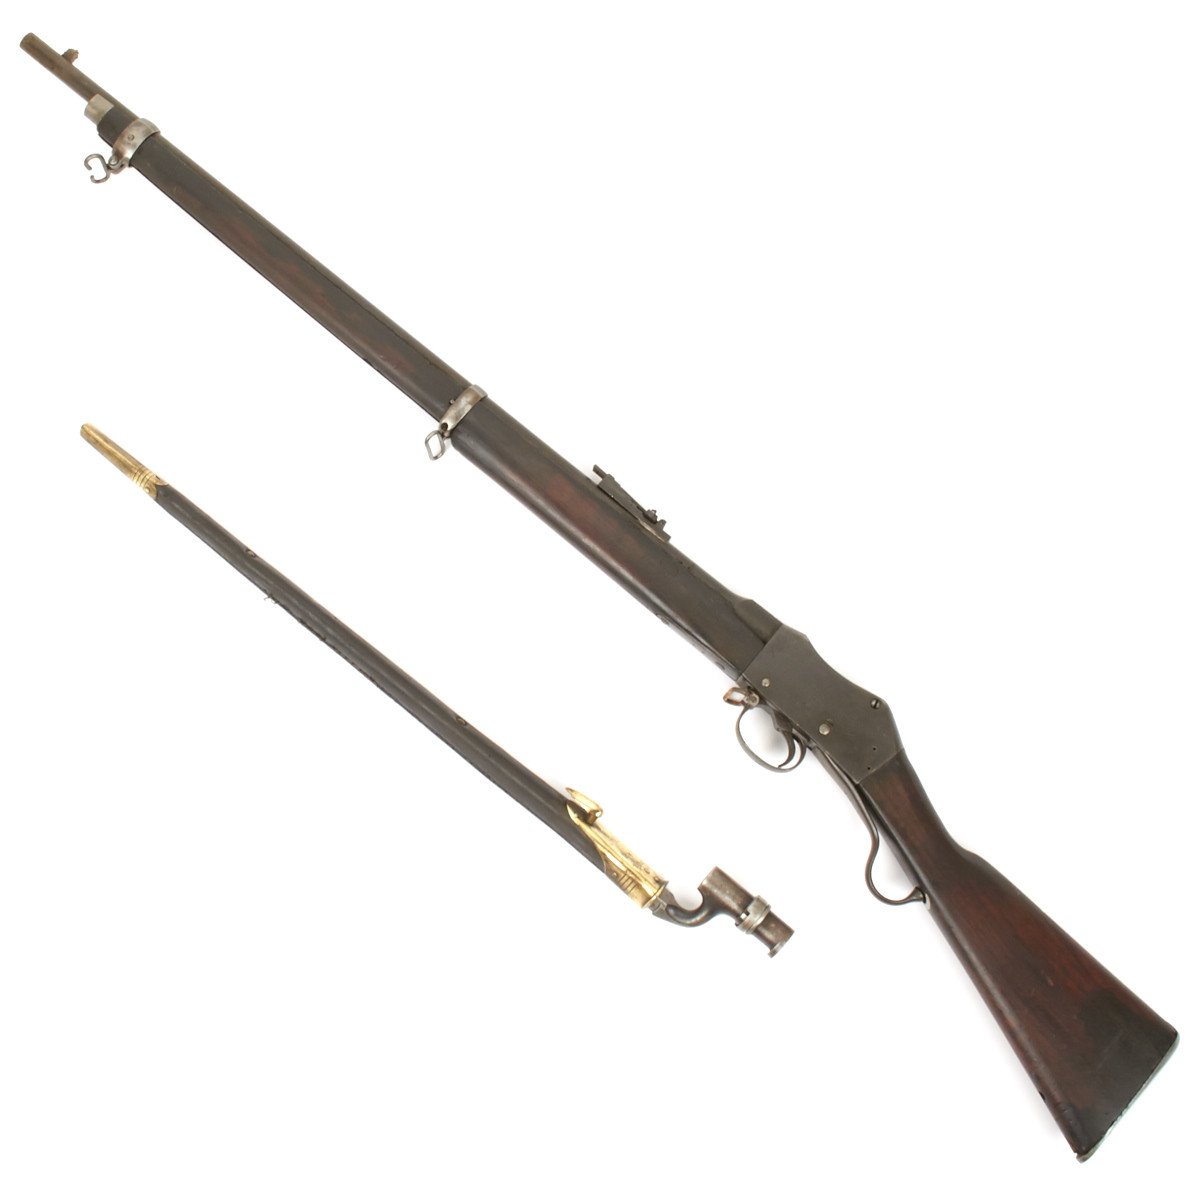 Enfield Rifle with Bayonet, 1887 - Firearms - Rifles - Militaria